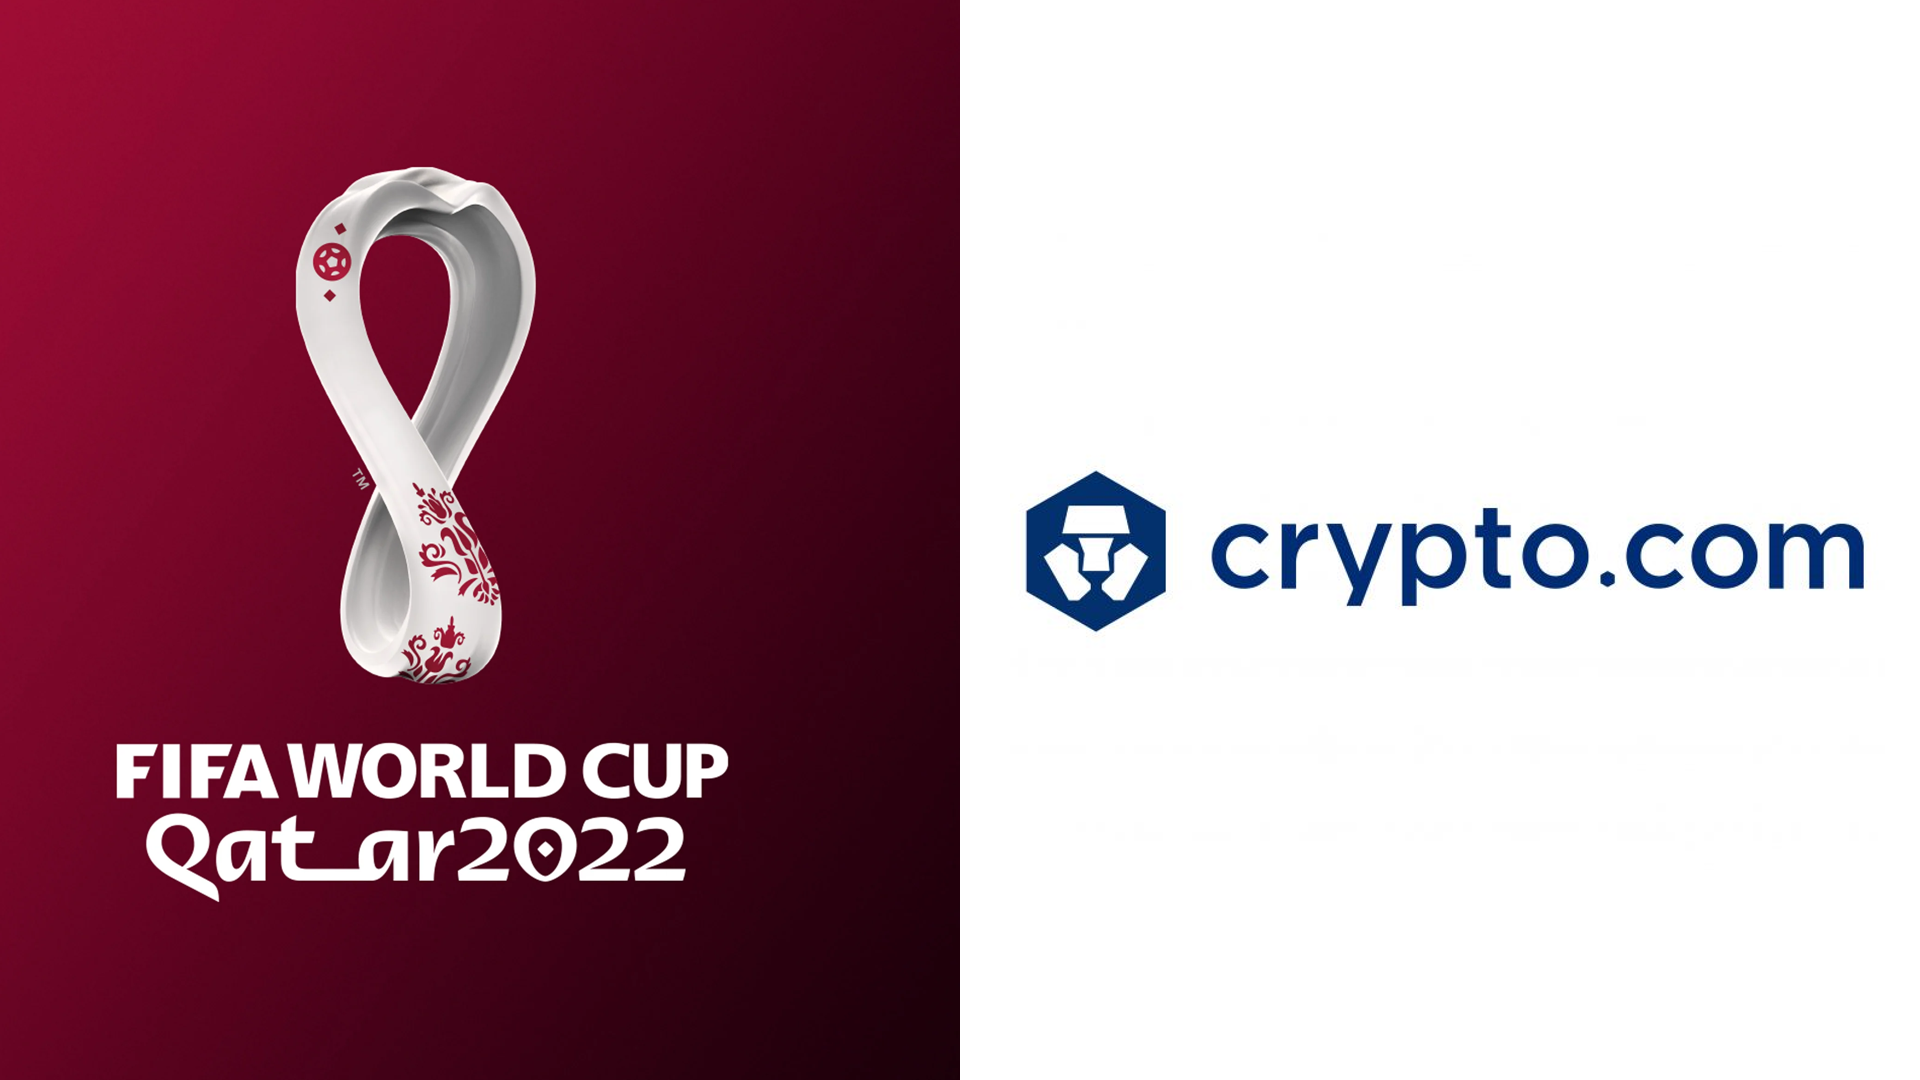 2022 Qatar world cup and crypto.com,